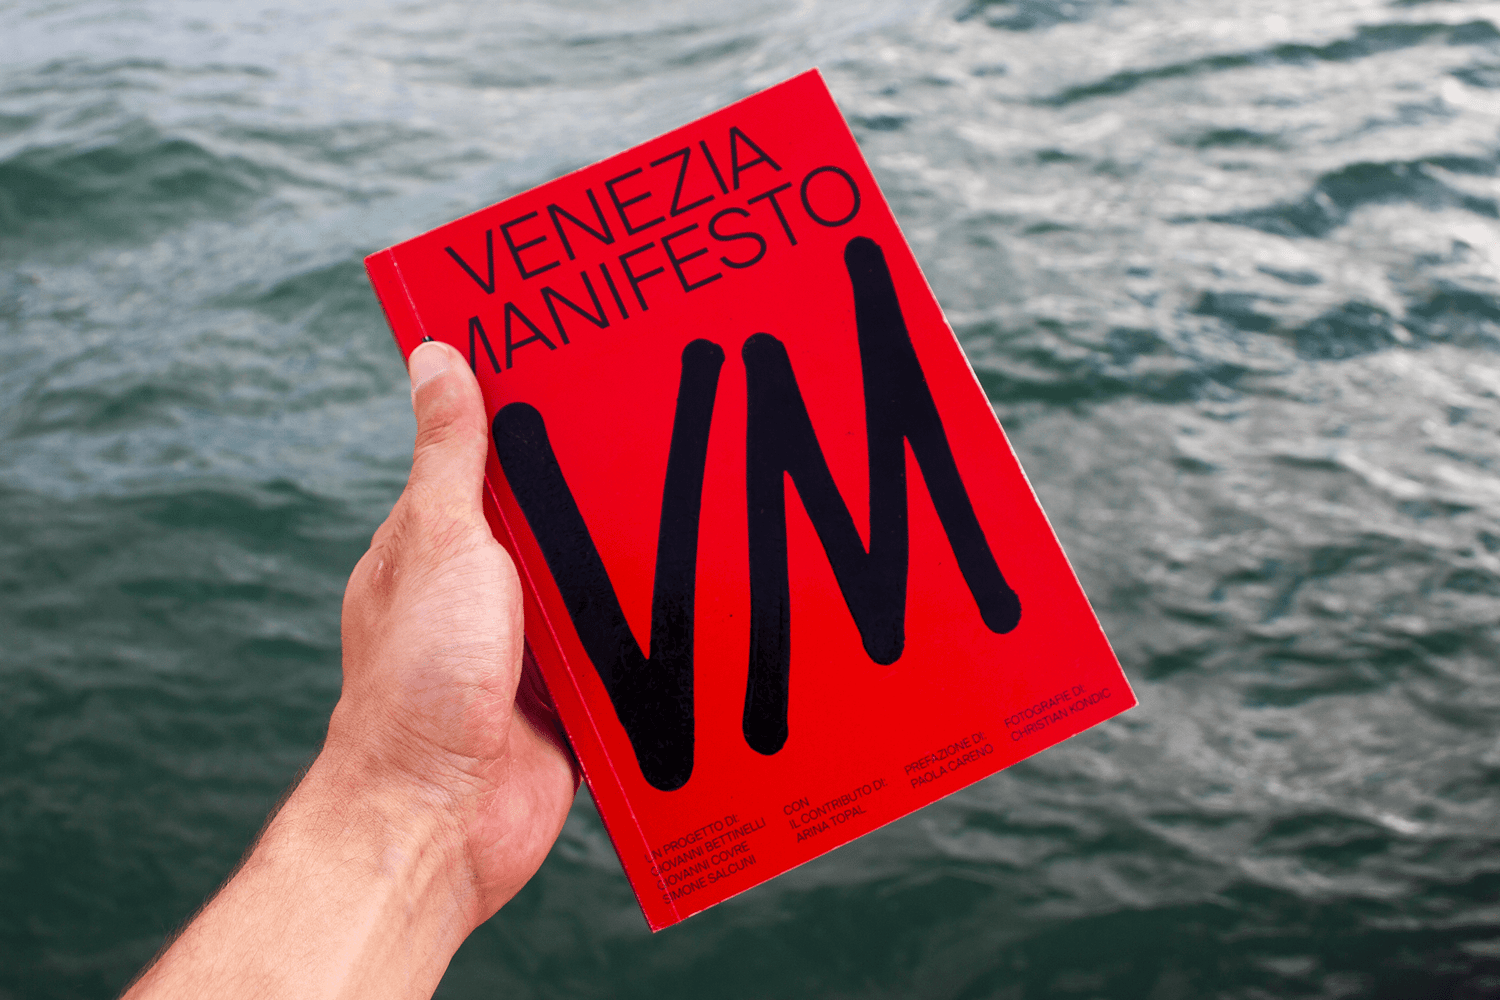 Venezia Manifesto - Book